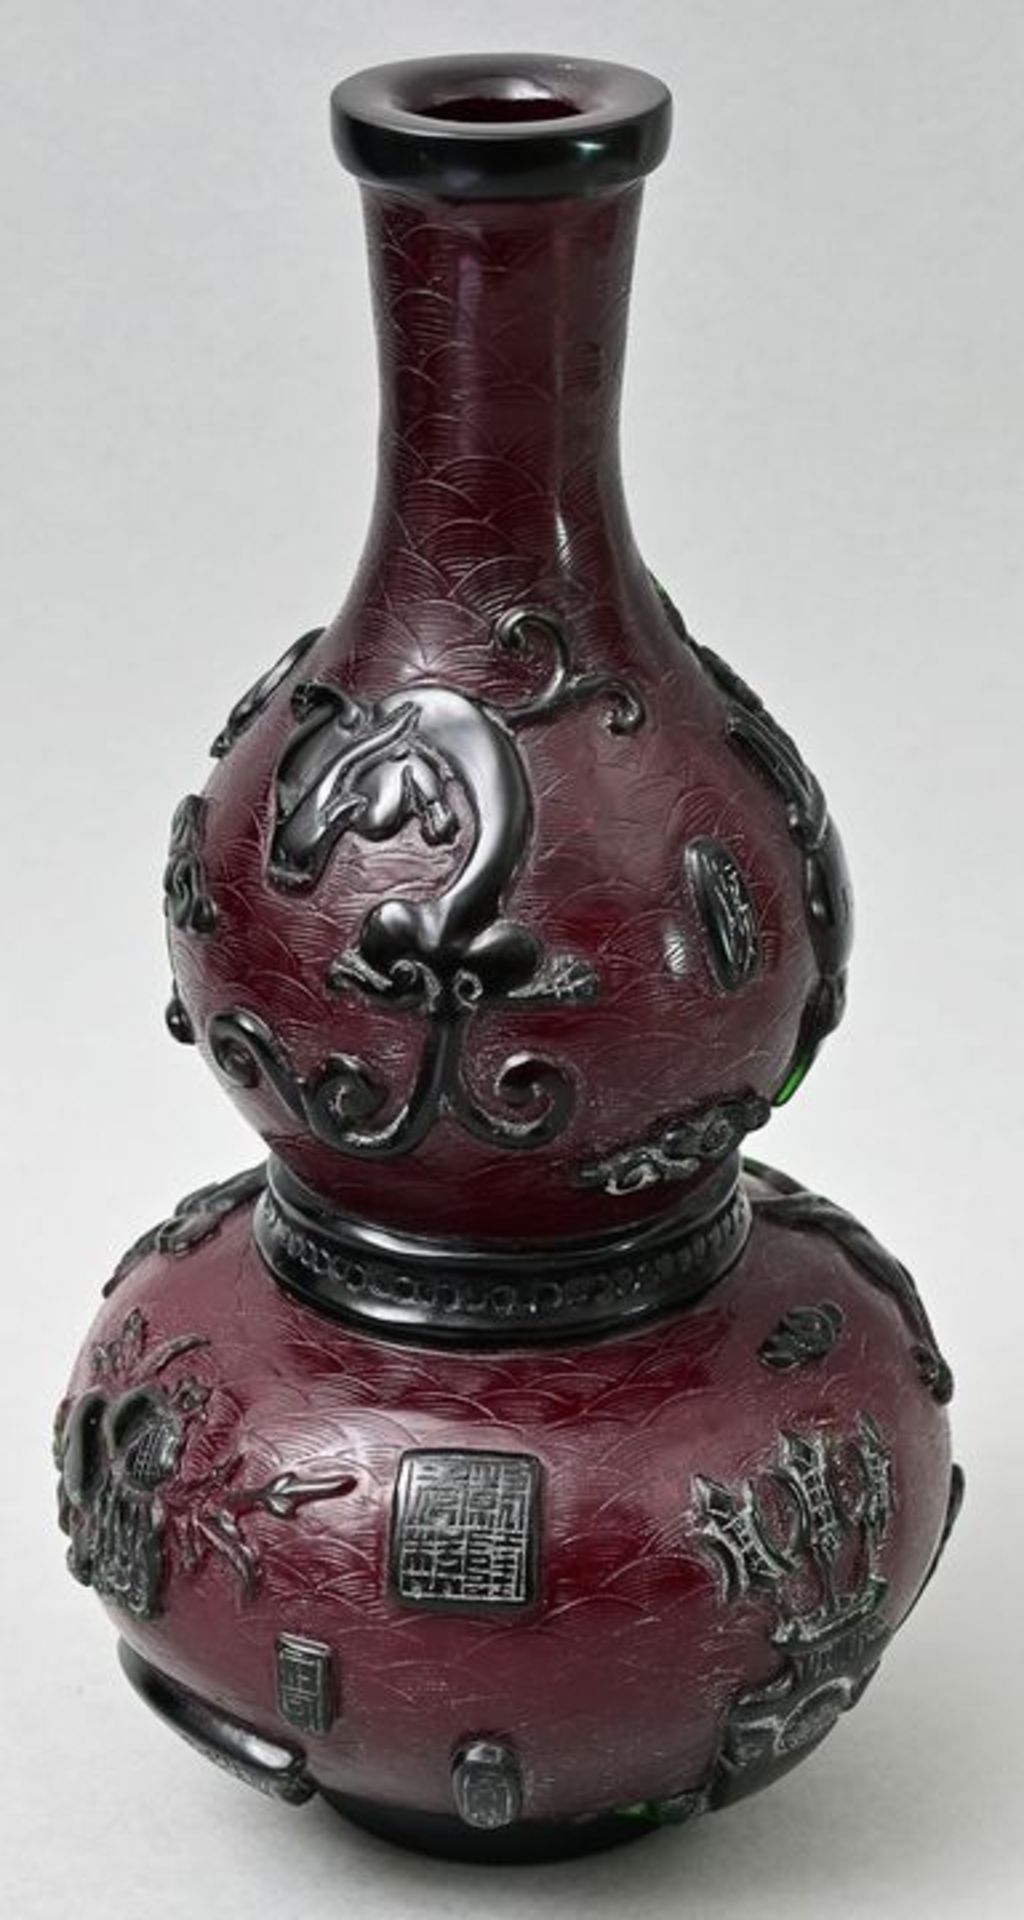 Flaschenvase Peking-Glas/ Peking glass bottle - Image 3 of 5